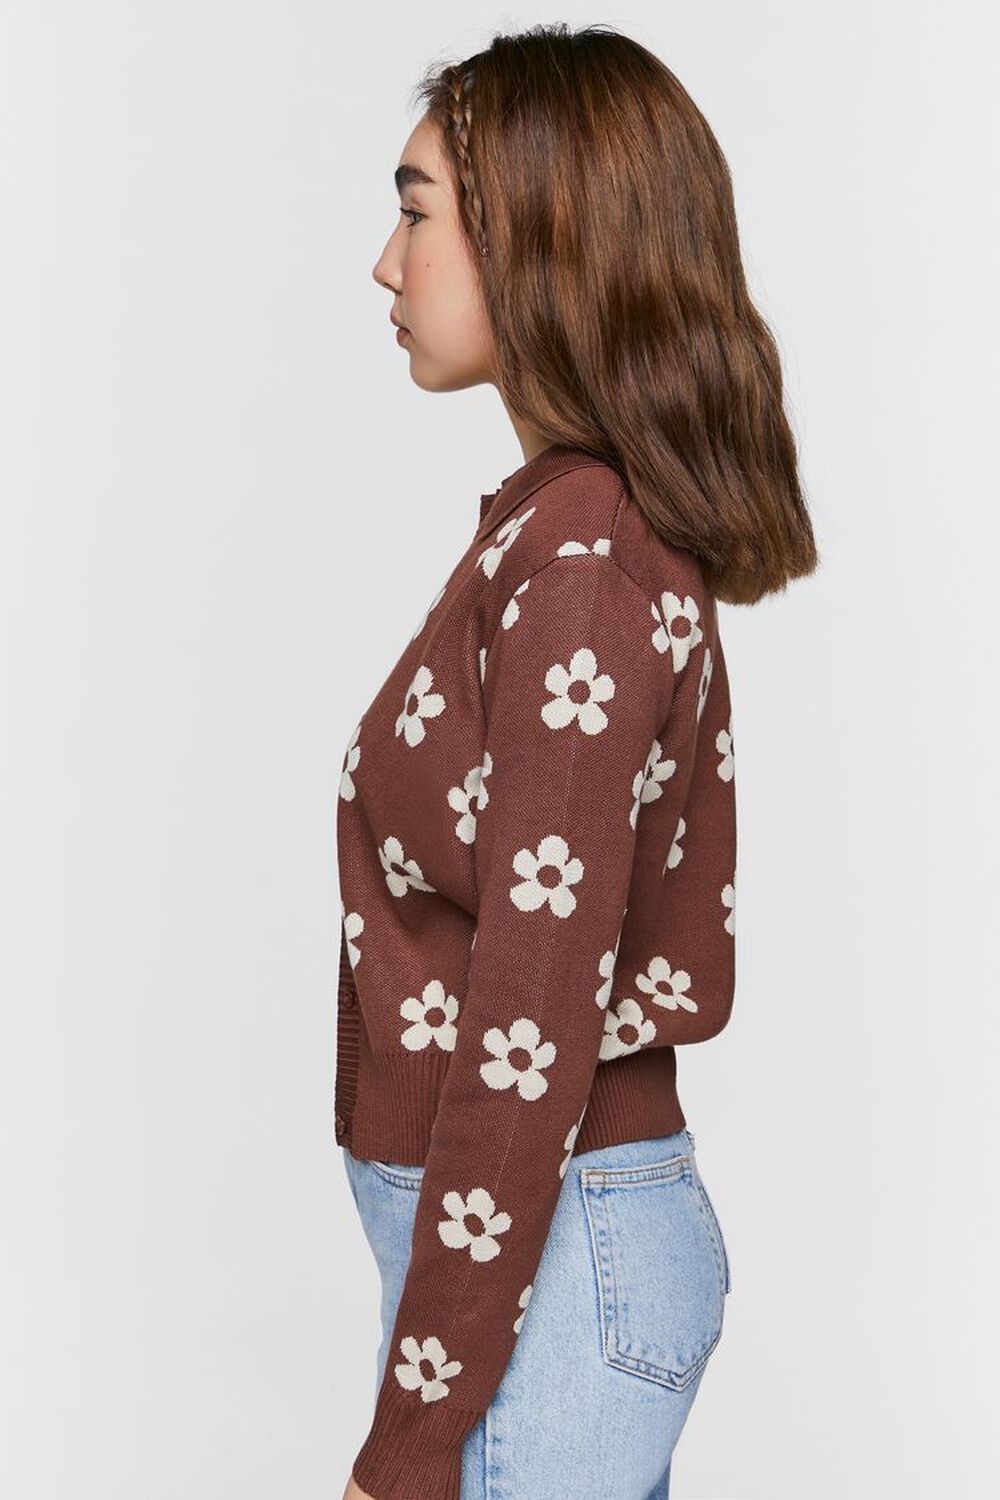 BROWN/MULTI Floral Print Cardigan Sweater, image 2